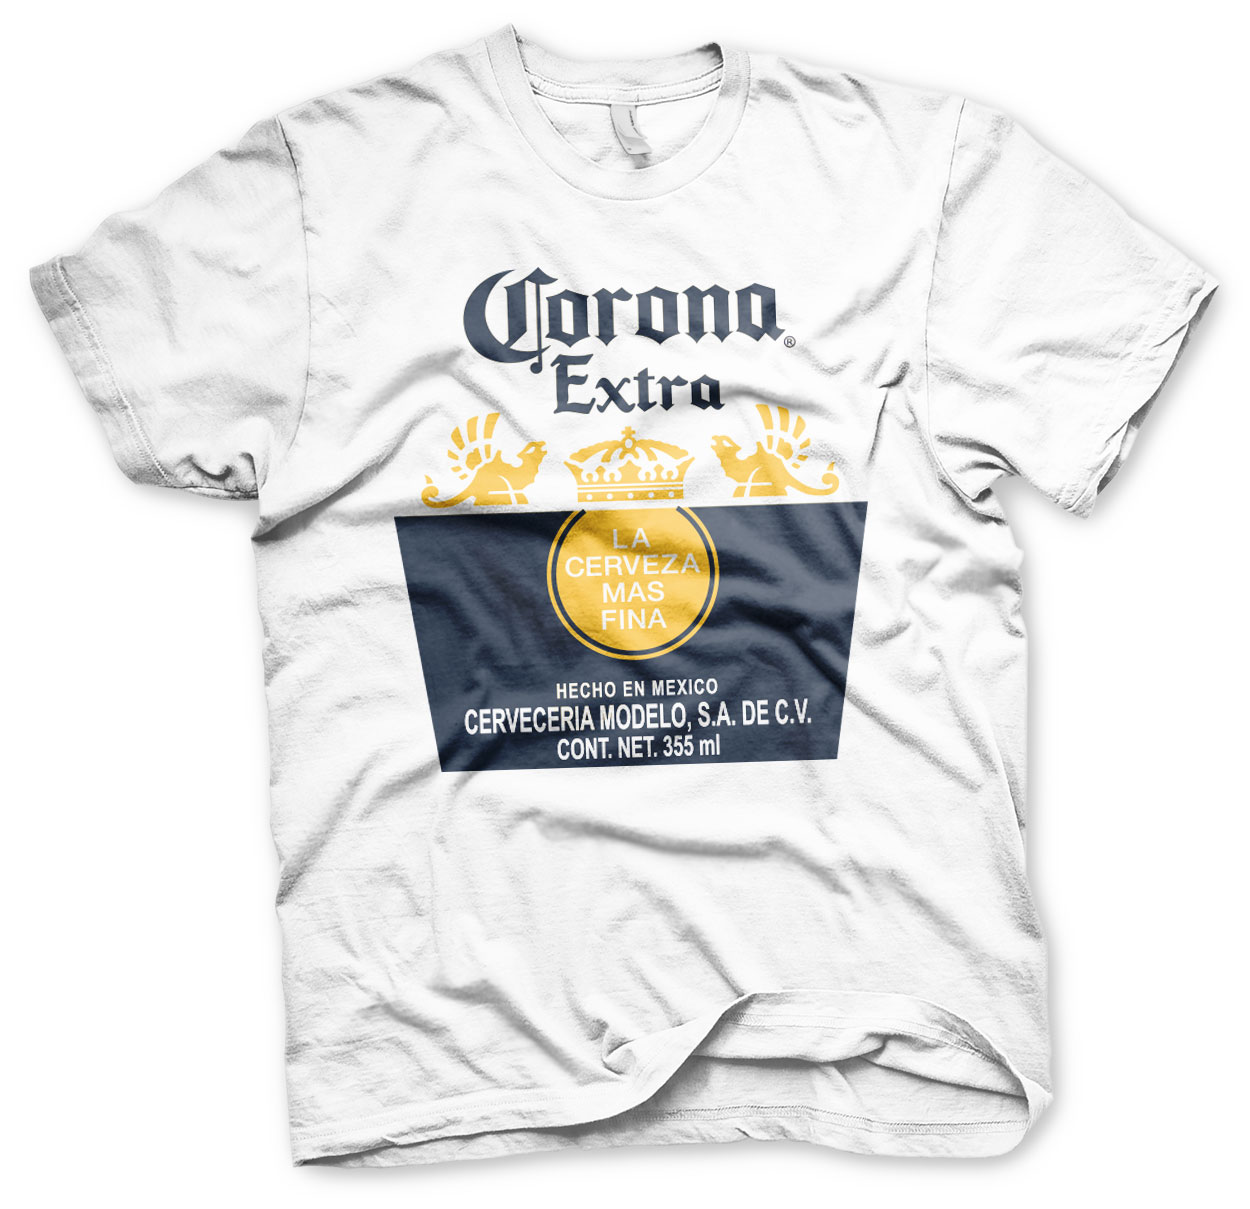 Catholique Extra Jersey-CORONA EXTRA bière T-shirt! Livraison gratuite! 